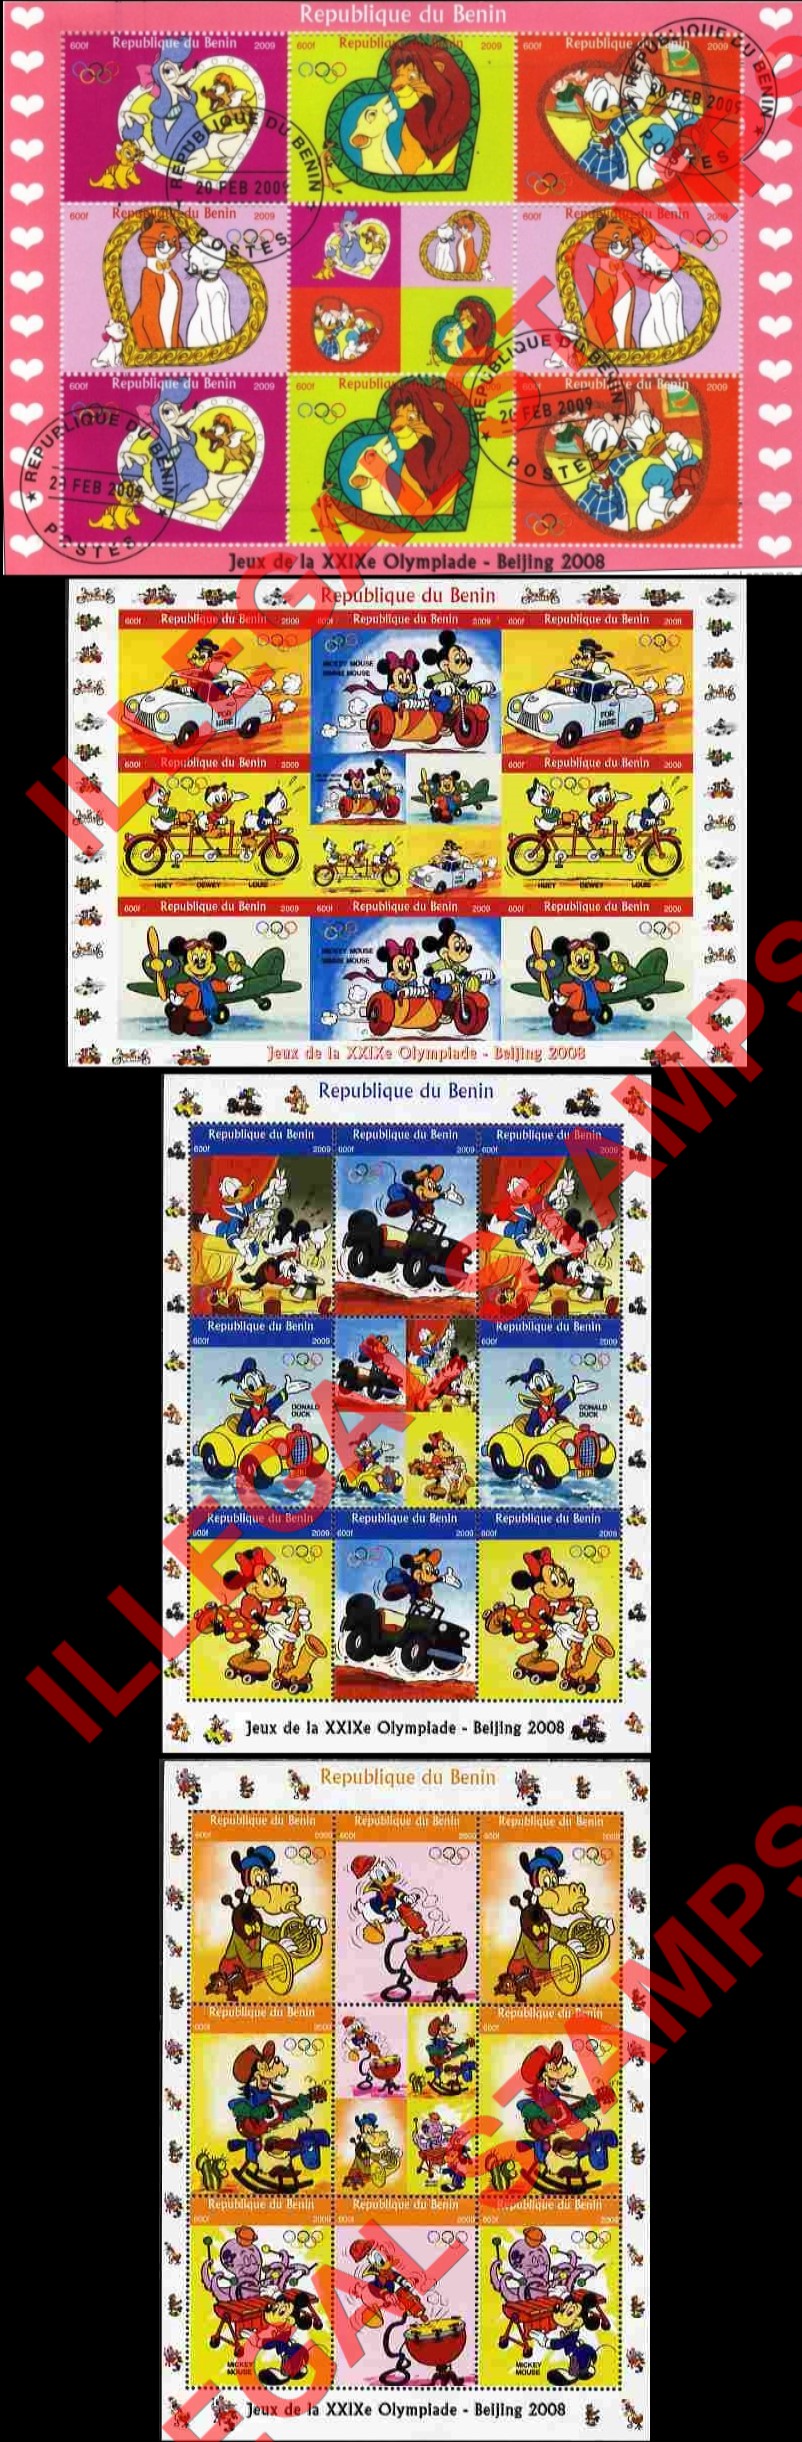 Benin 2009 Olympic Games Disney Cartoons Illegal Stamp Sheetlets of 9